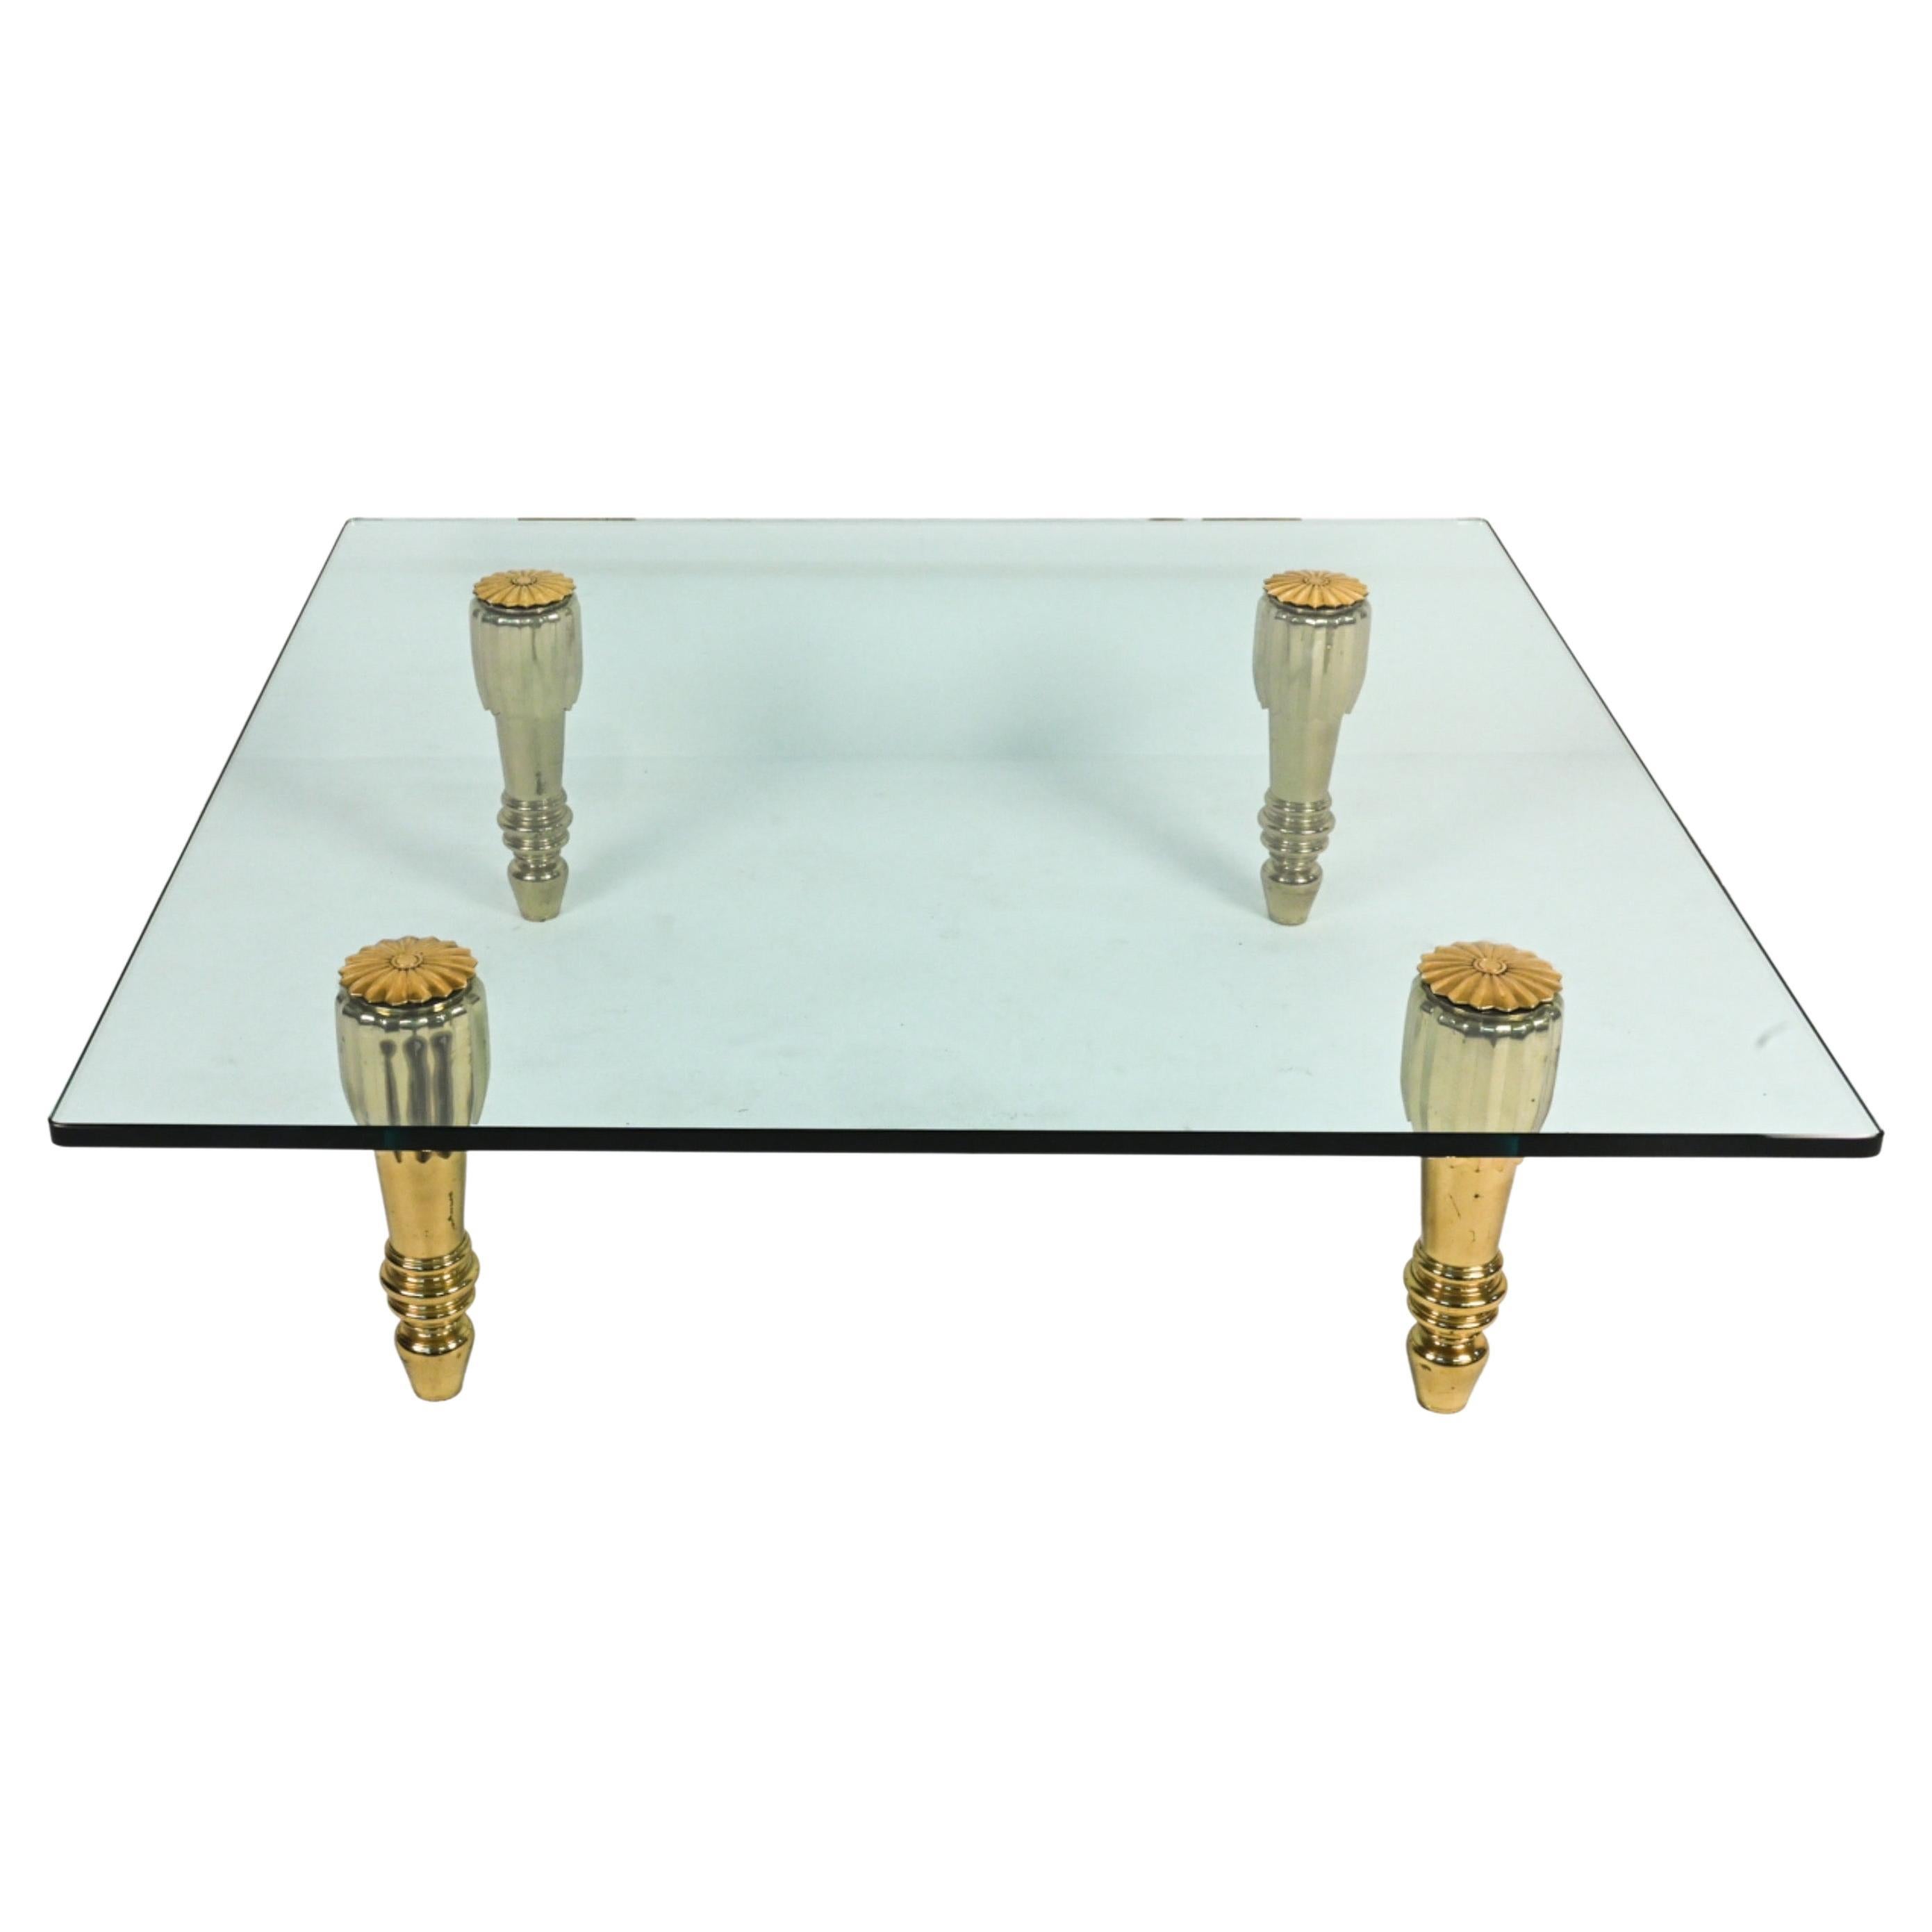  Grande table basse carrée en verre de style Hollywood Regency avec pieds en laiton 